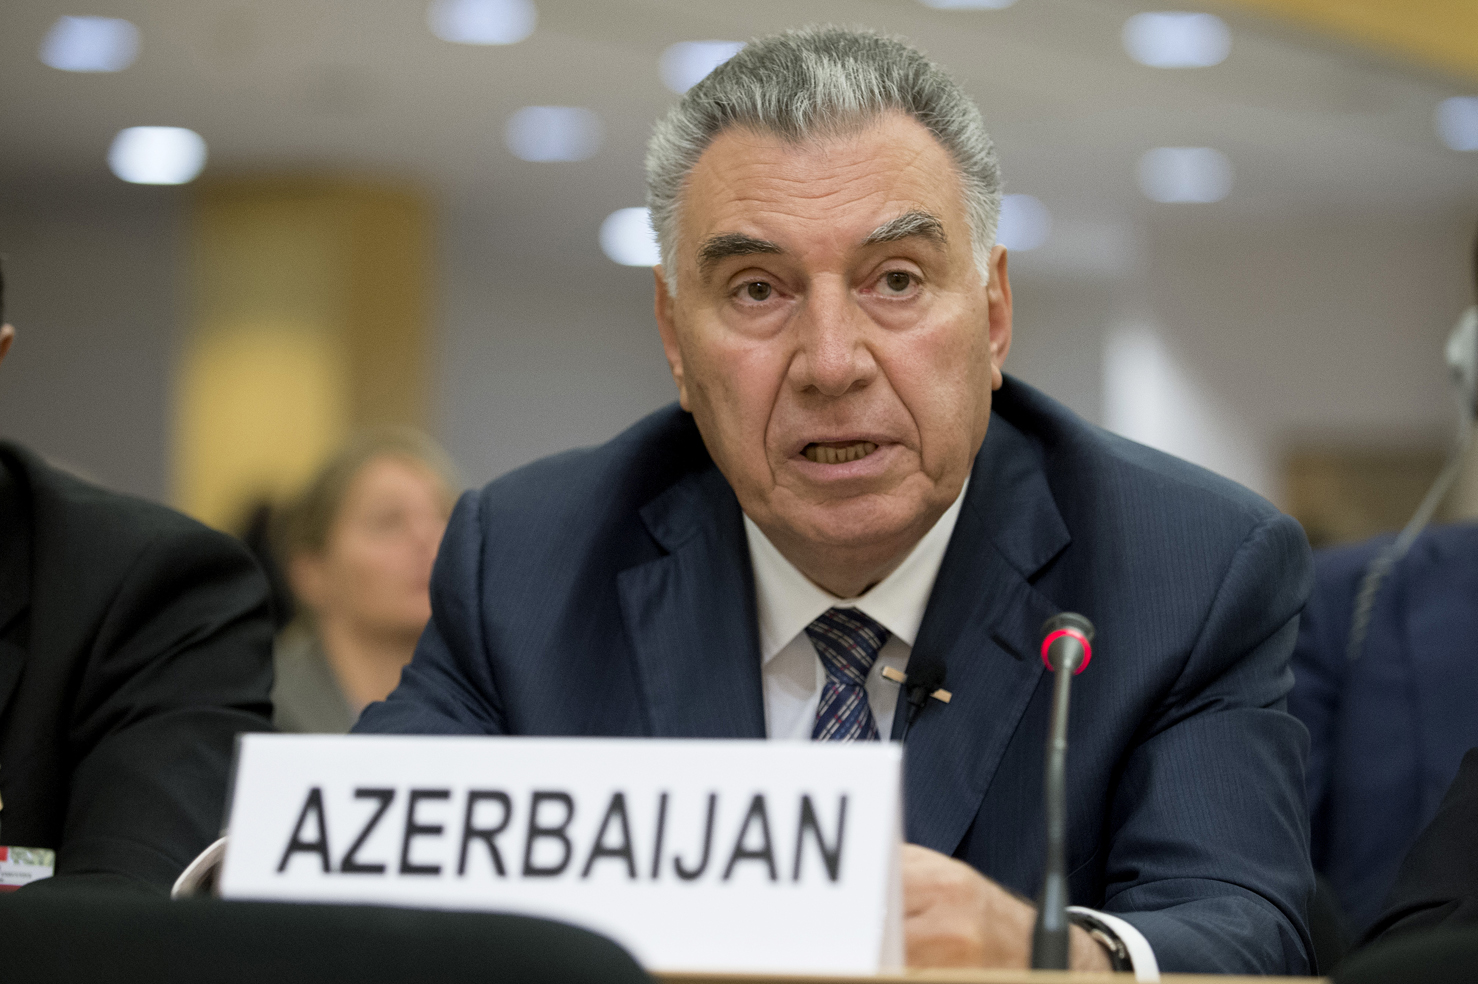 Azerbaijani refugees to appeal to European Parliament